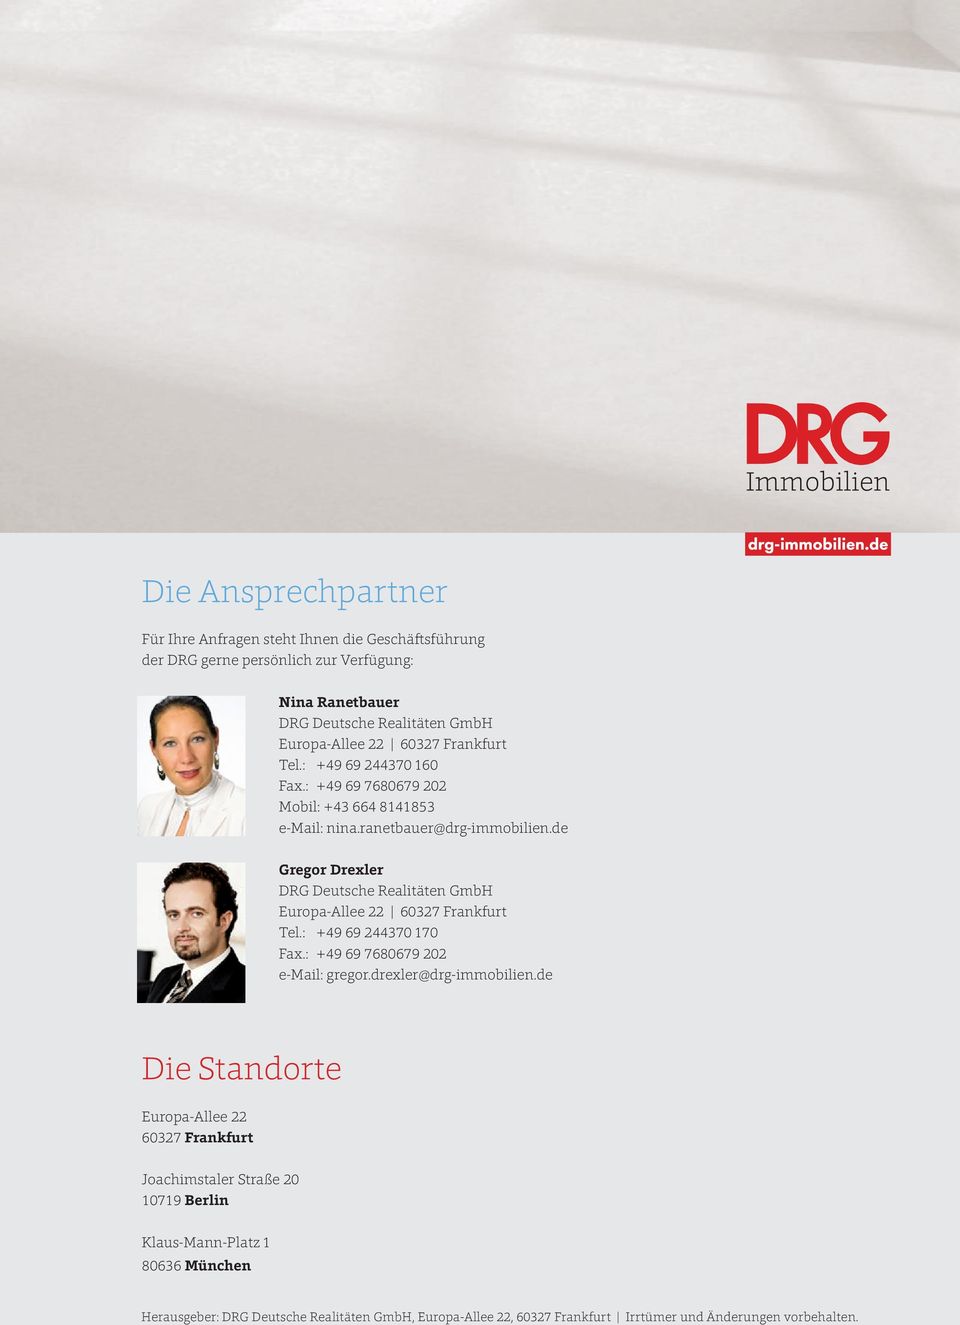 de Gregor Drexler DRG Deutsche Realitäten GmbH Europa-Allee 22 60327 Frankfurt Tel.: +49 69 244370 170 Fax.: +49 69 7680679 202 e-mail: gregor.drexler@drg-immobilien.